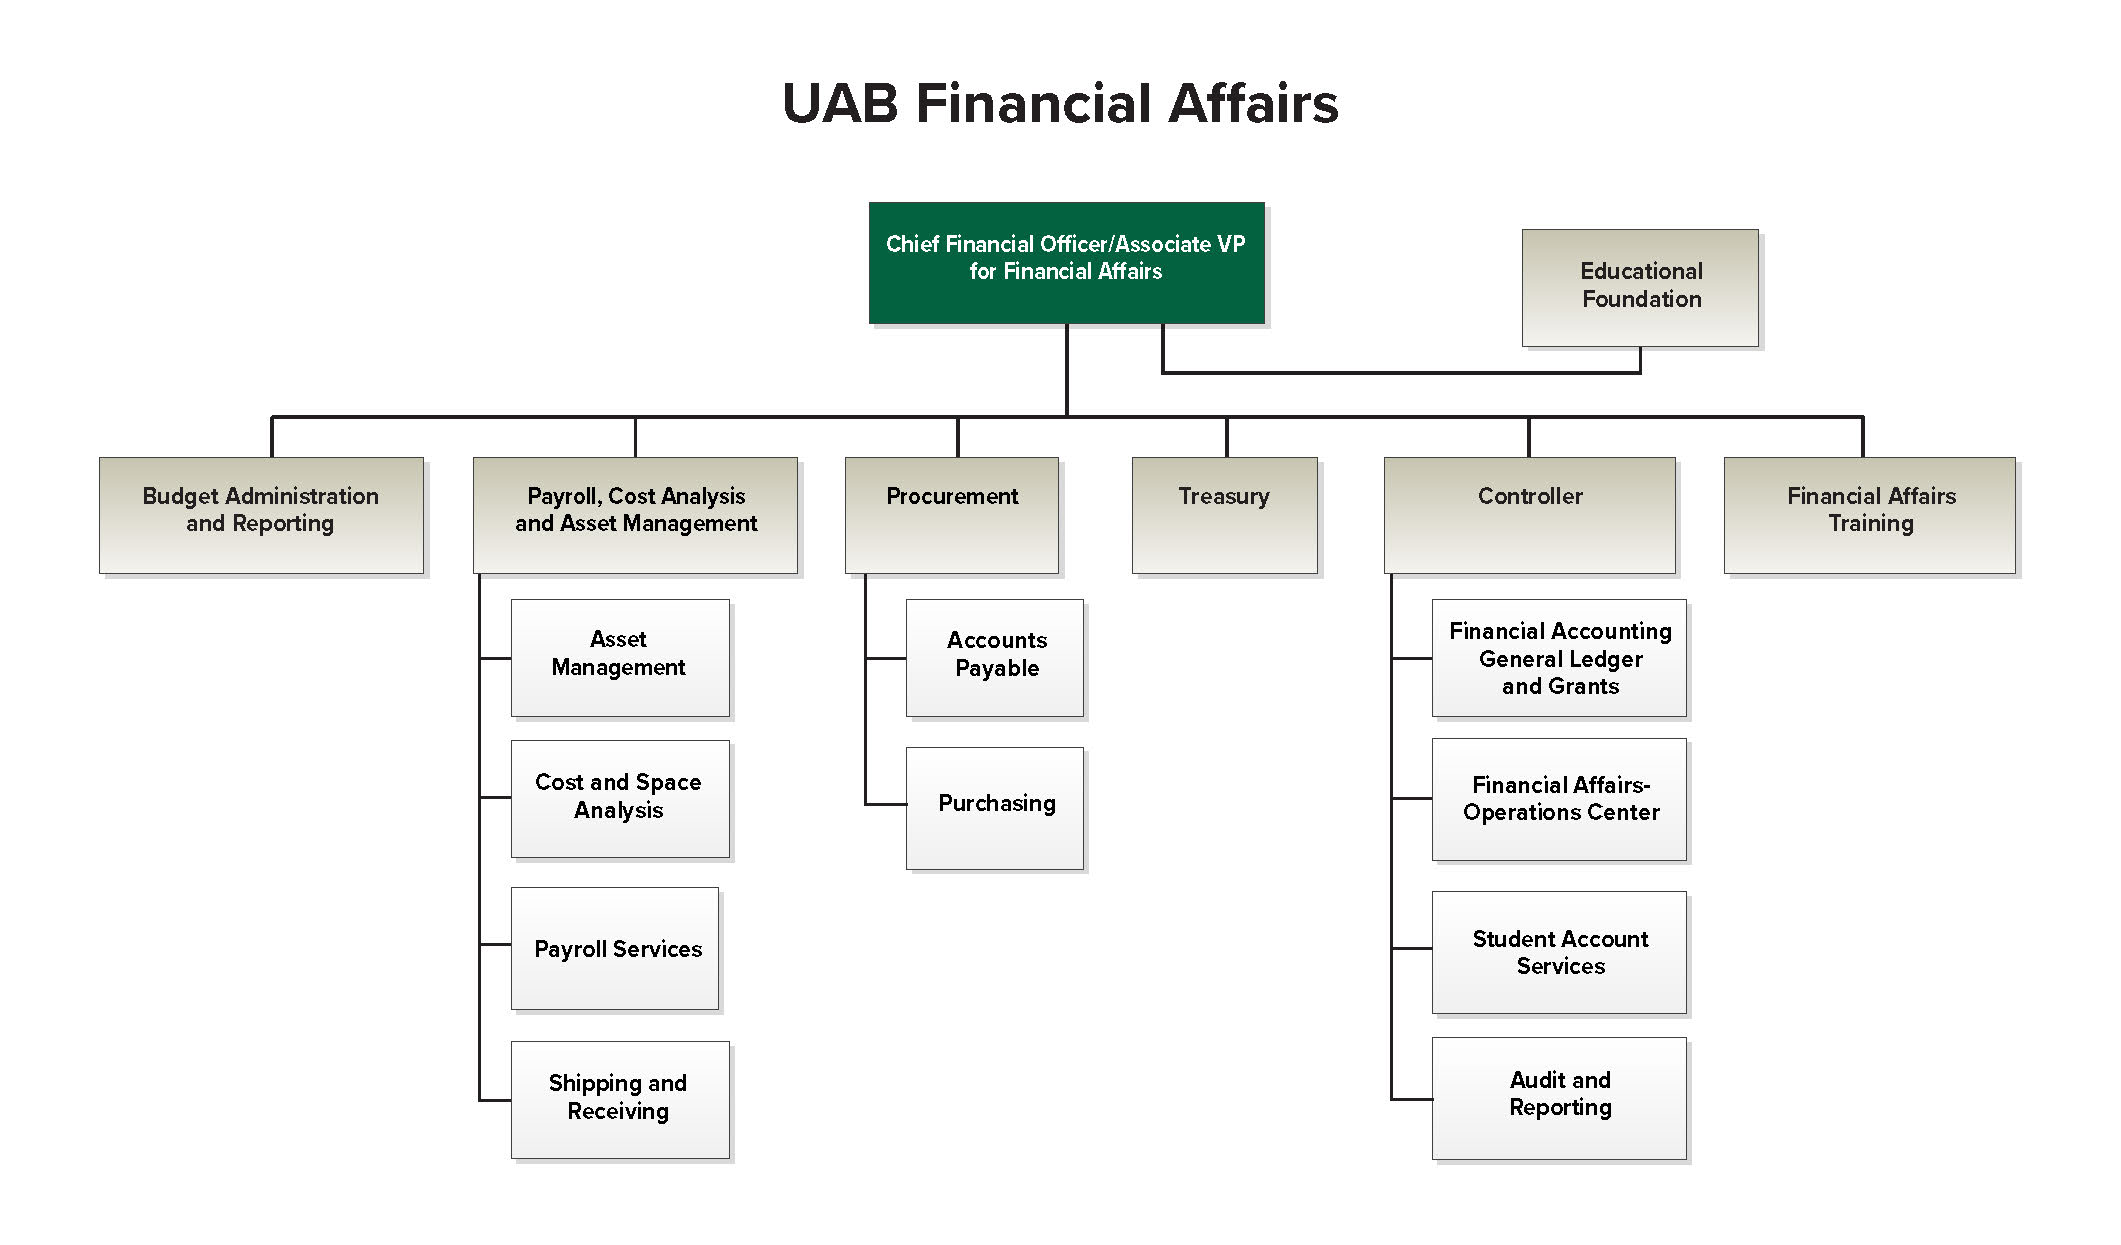 Organizational Chart Financial Affairs UAB